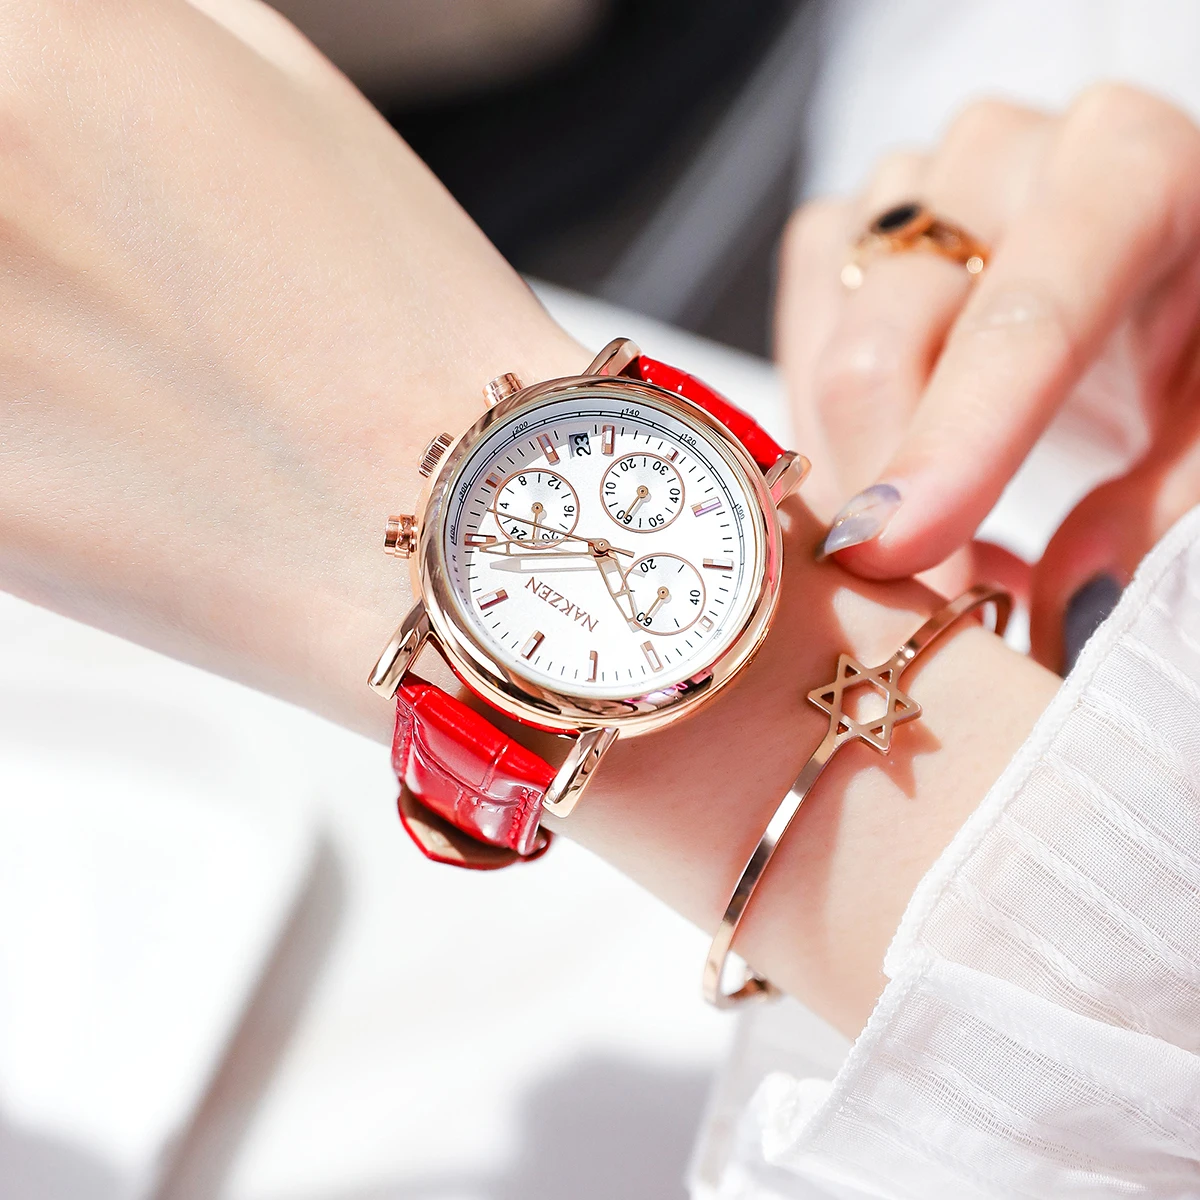 NAKZEN Women Watches Fashion Casual Top Luxury Brand Leather Quartz Watch Ladies Chronograph Clock Gift Relogio Feminino enlarge